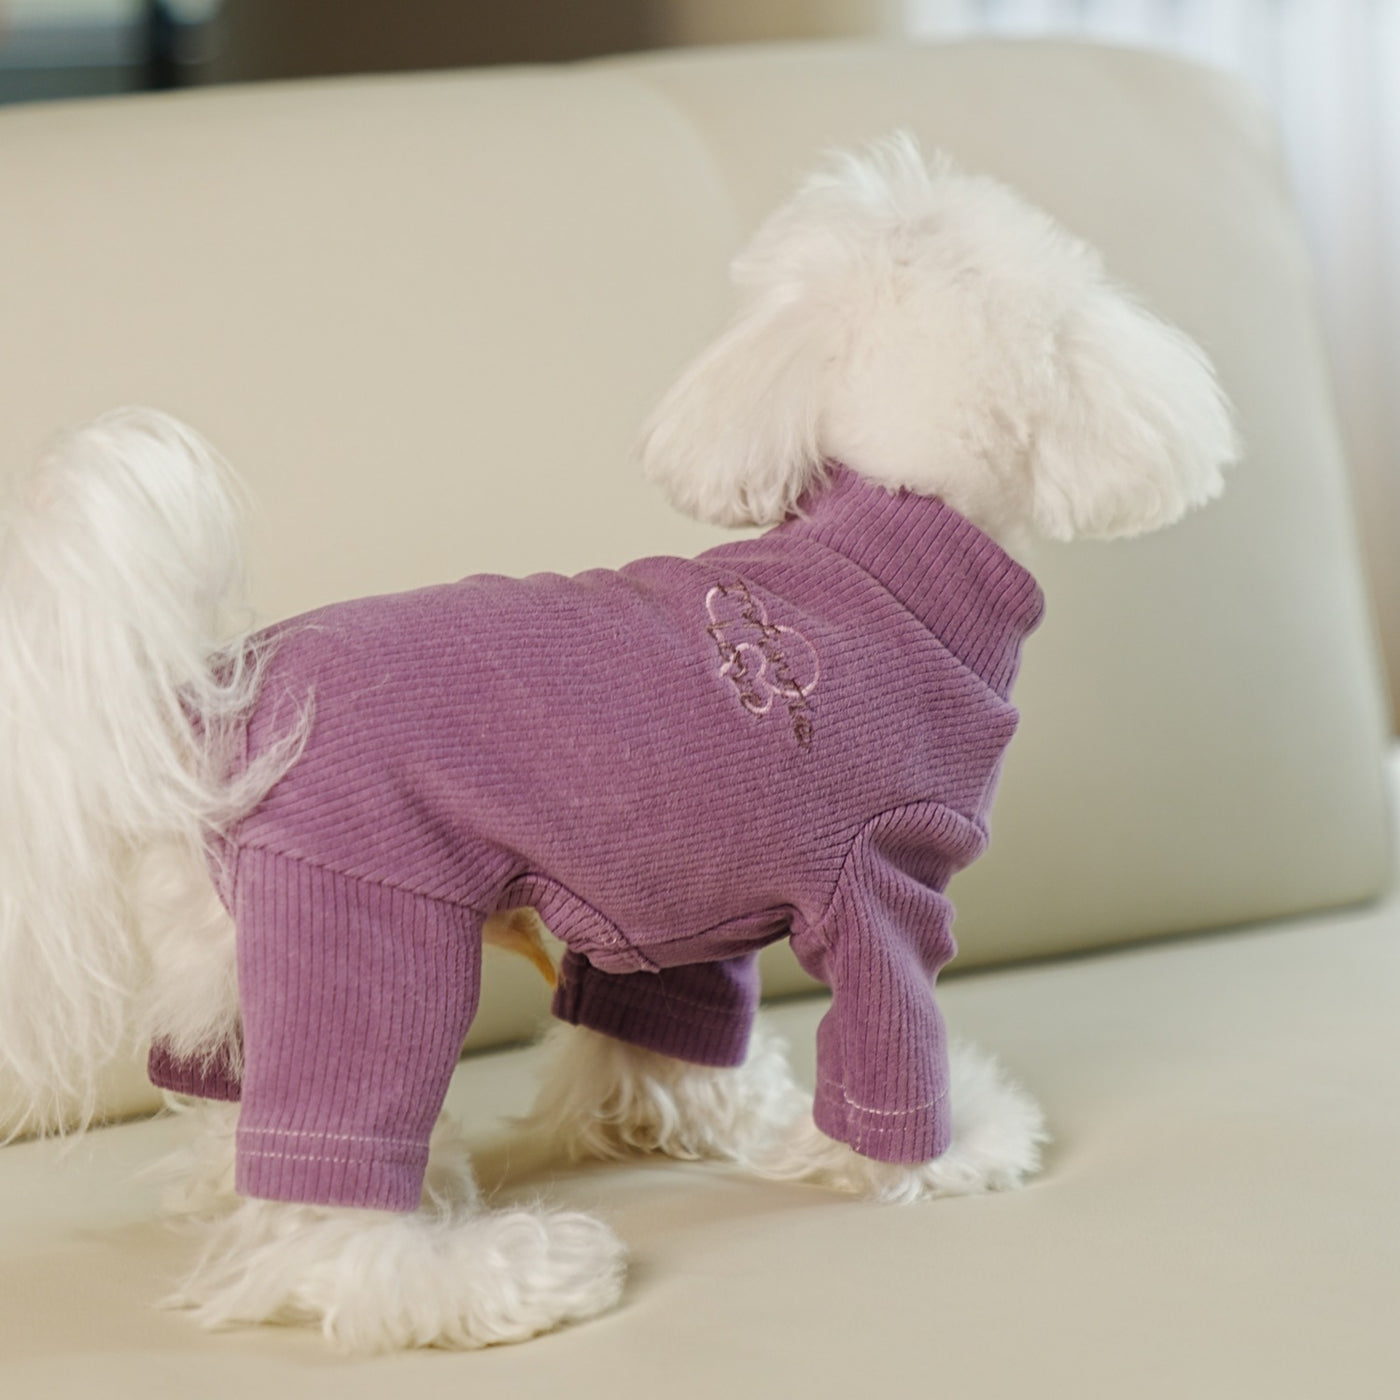 Warm Heart Printed Dog Jumpsuit Pajama